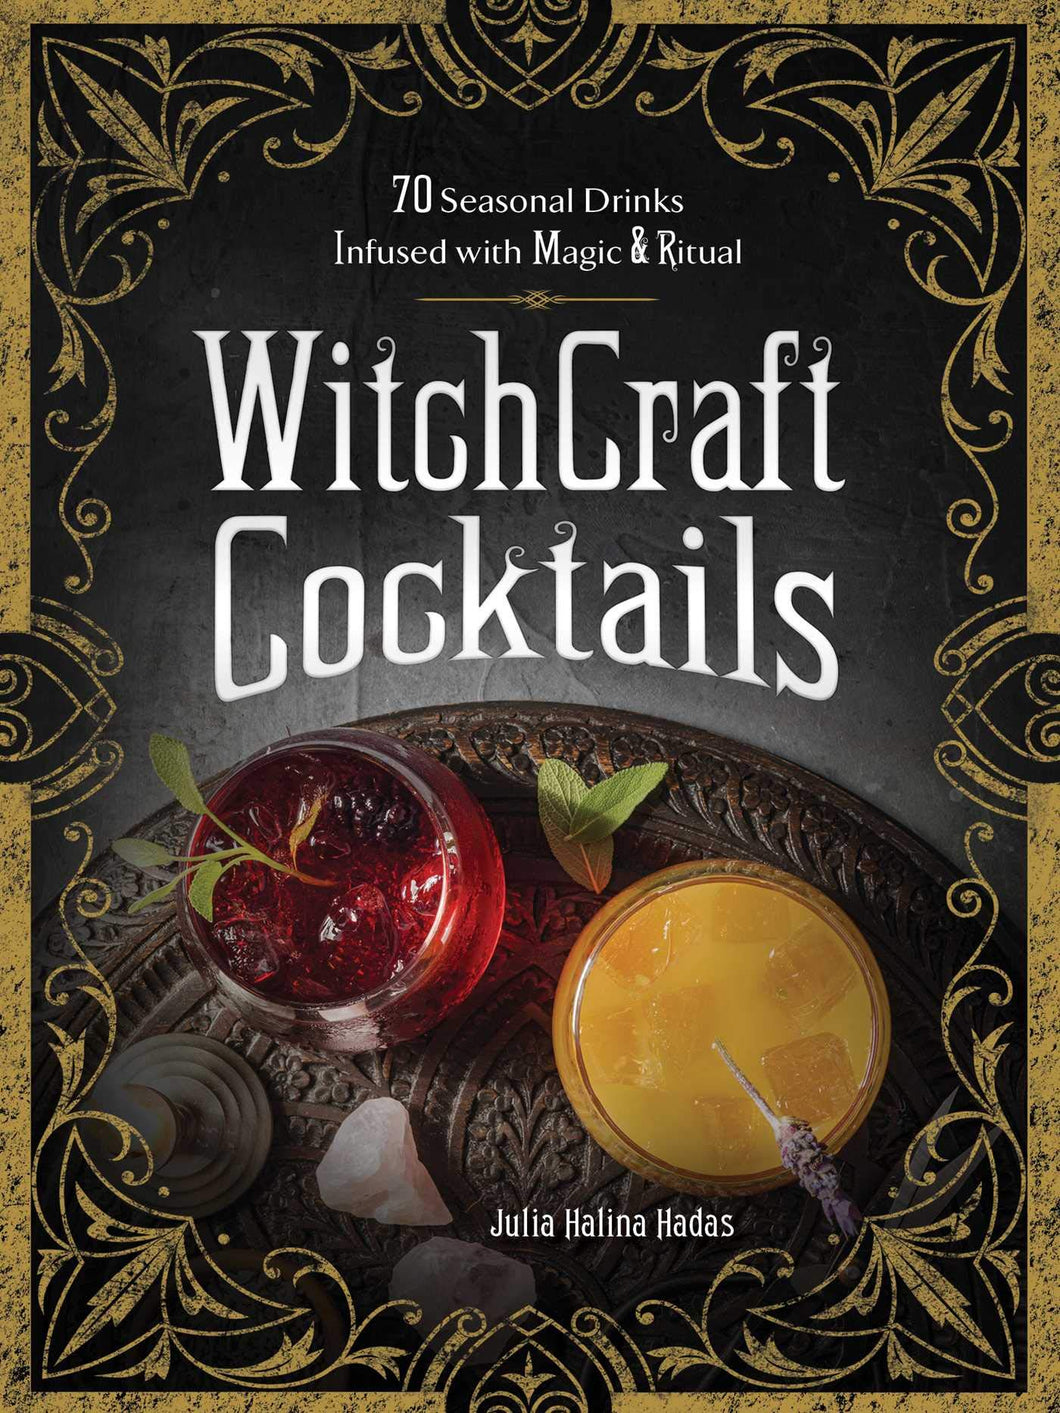 WitchCraft Cocktails: 70 Seasonal Drinks Infused with Magic & Ritual [Julia Halina Hadas]